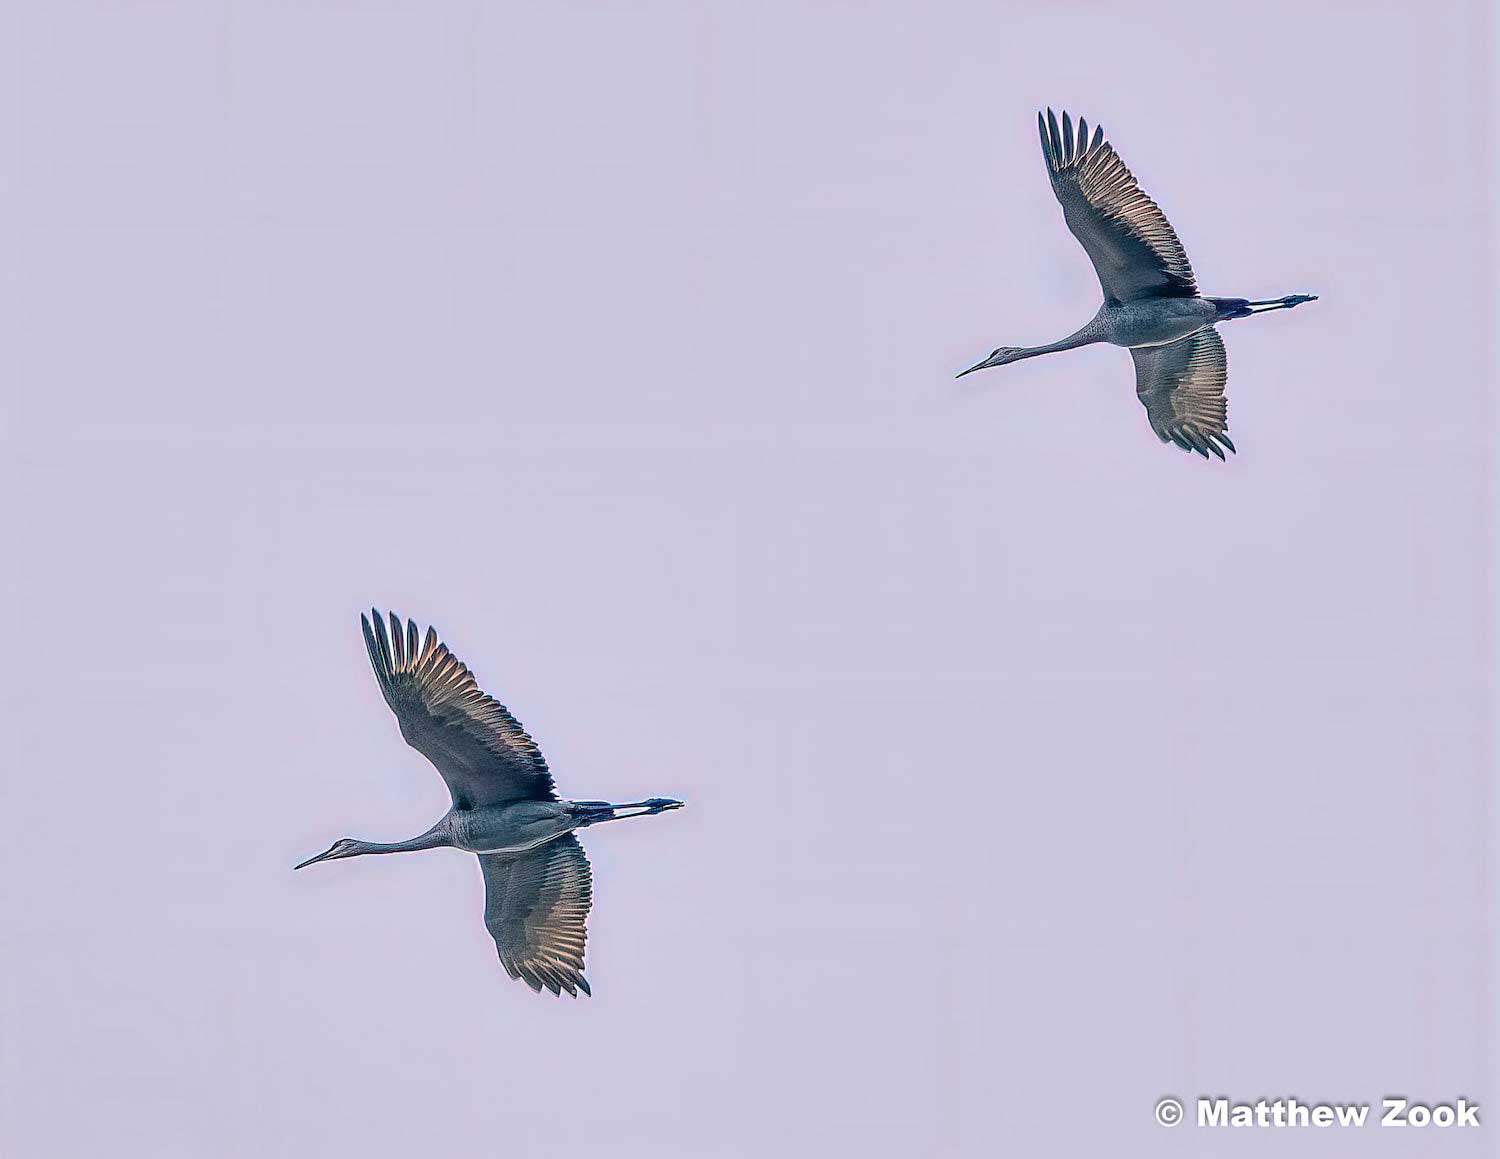 Two sandhill cranes flying overhead.